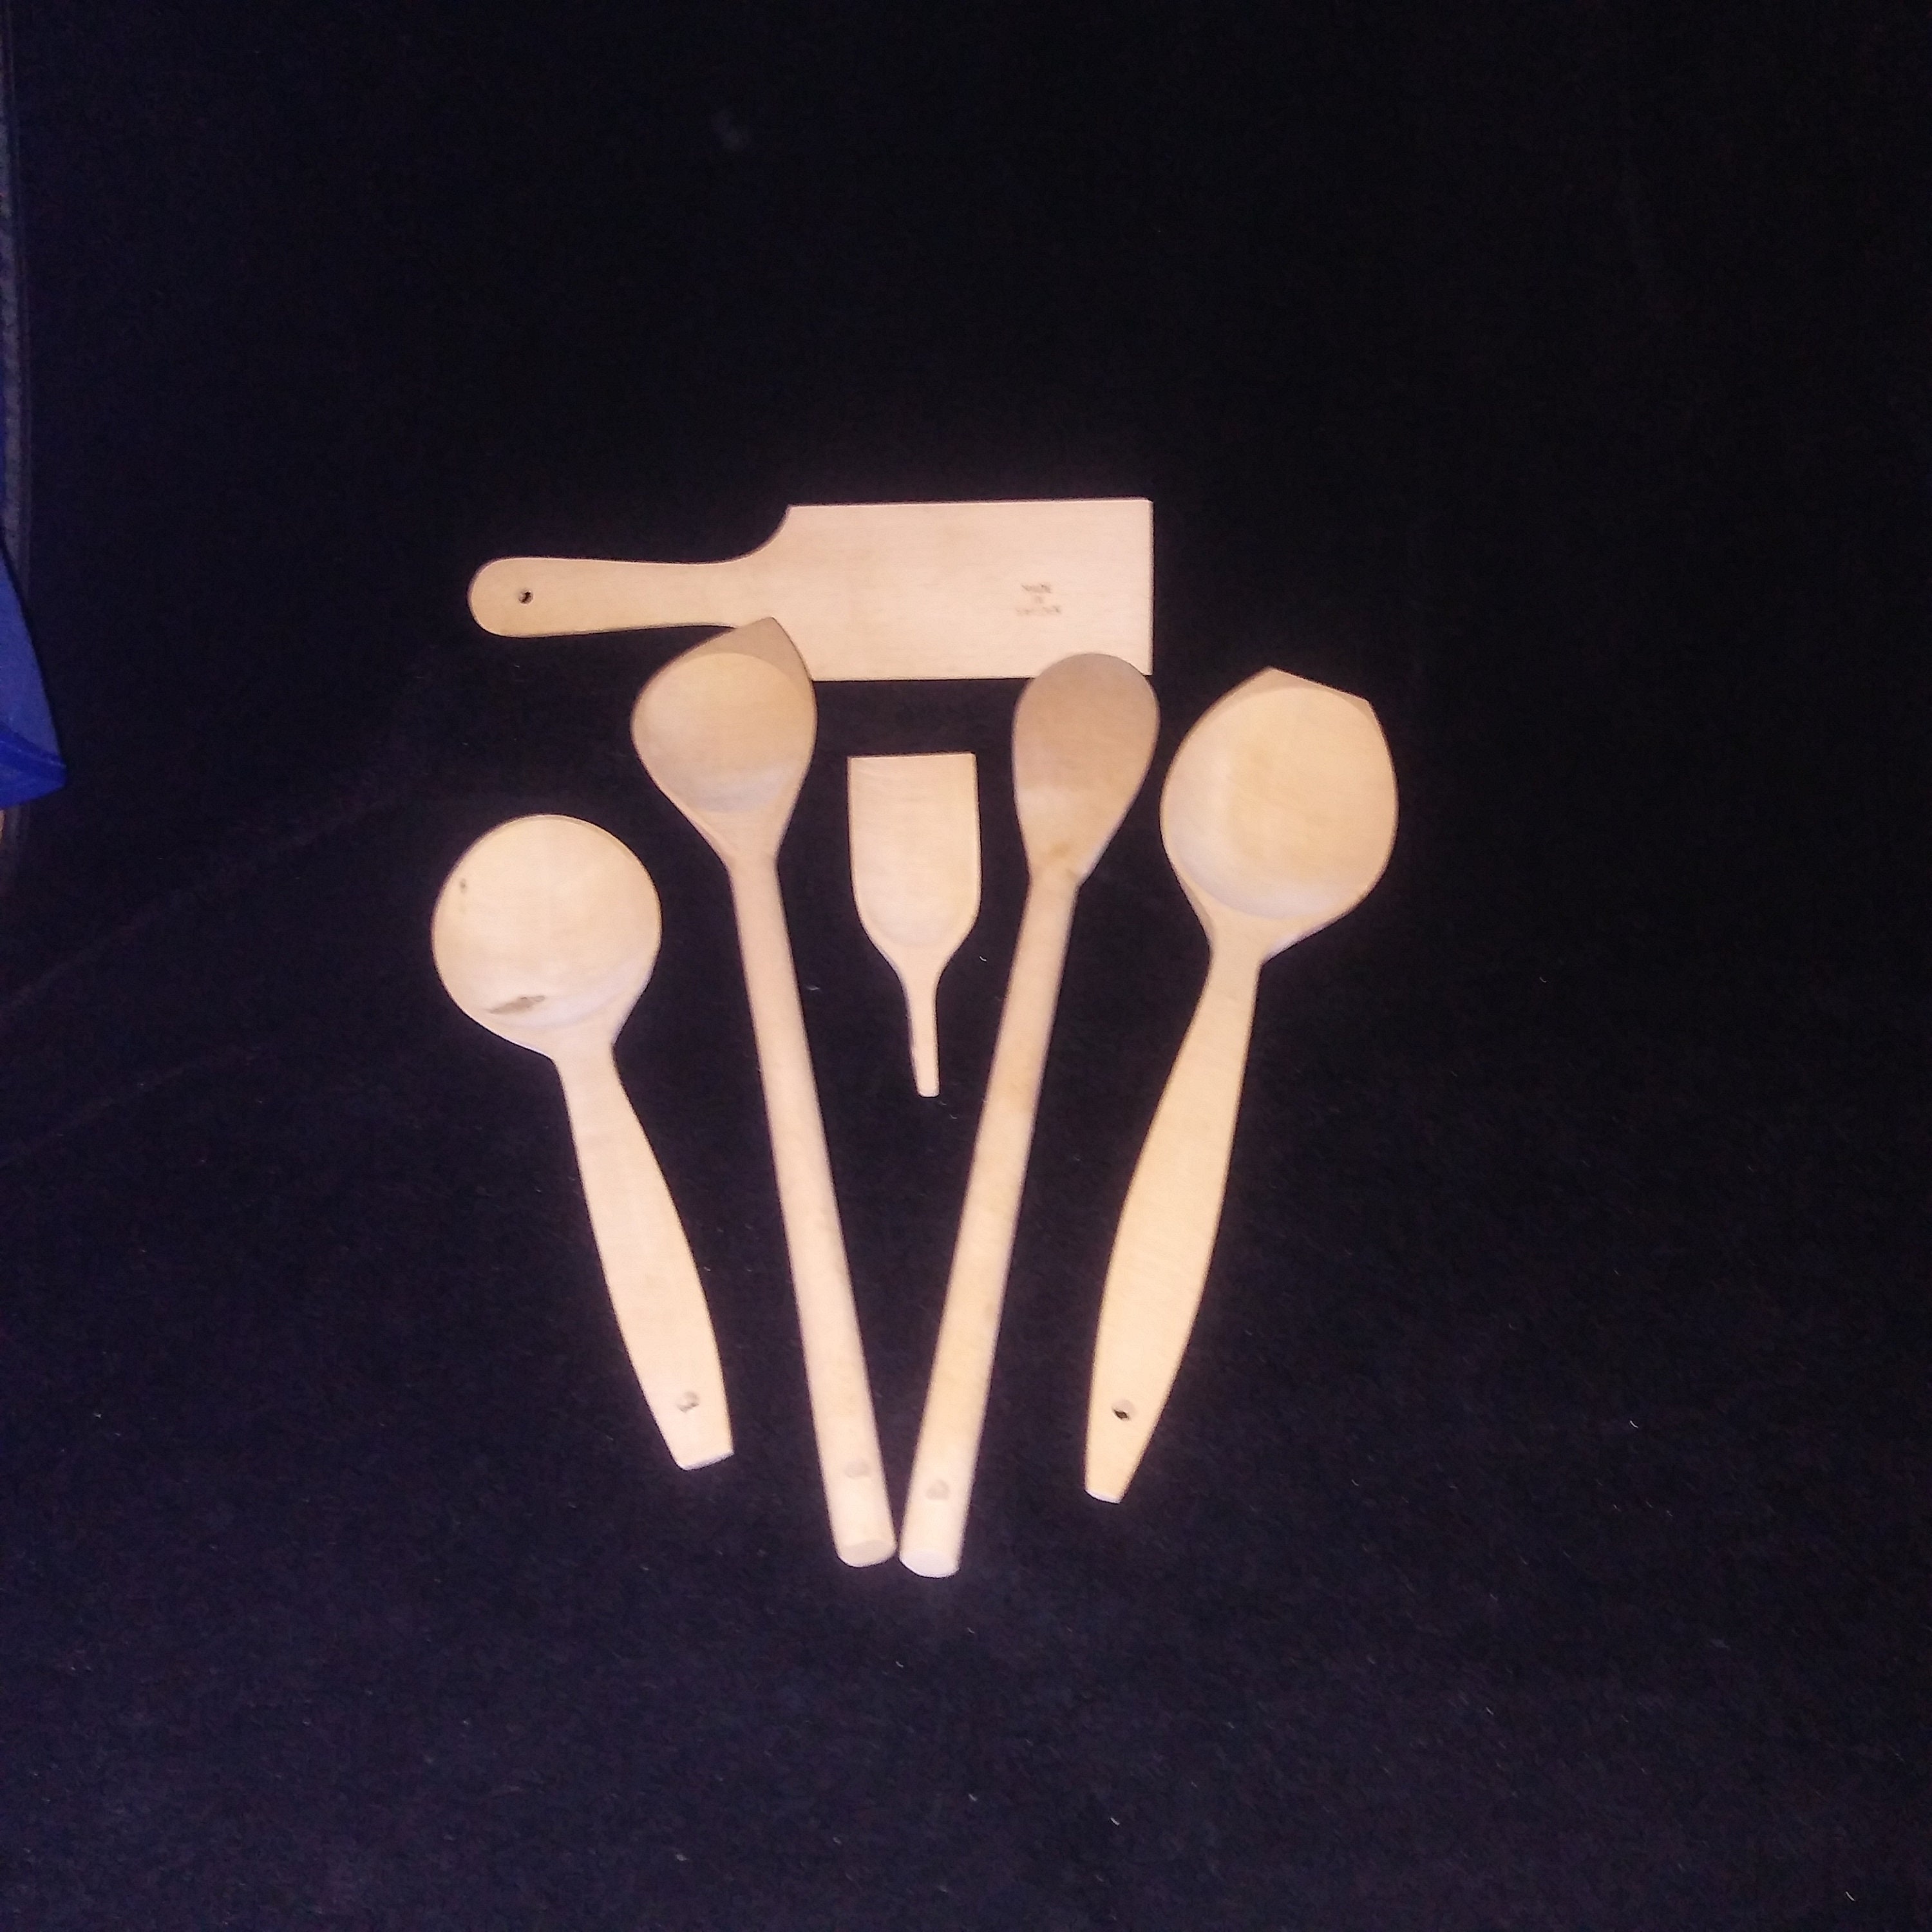 4Pcs Wooden Measuring Spoon Set Kitchen Measuring Spoons Tea Coffee Scoop  Wood Sugar Spice Spoon Measuring